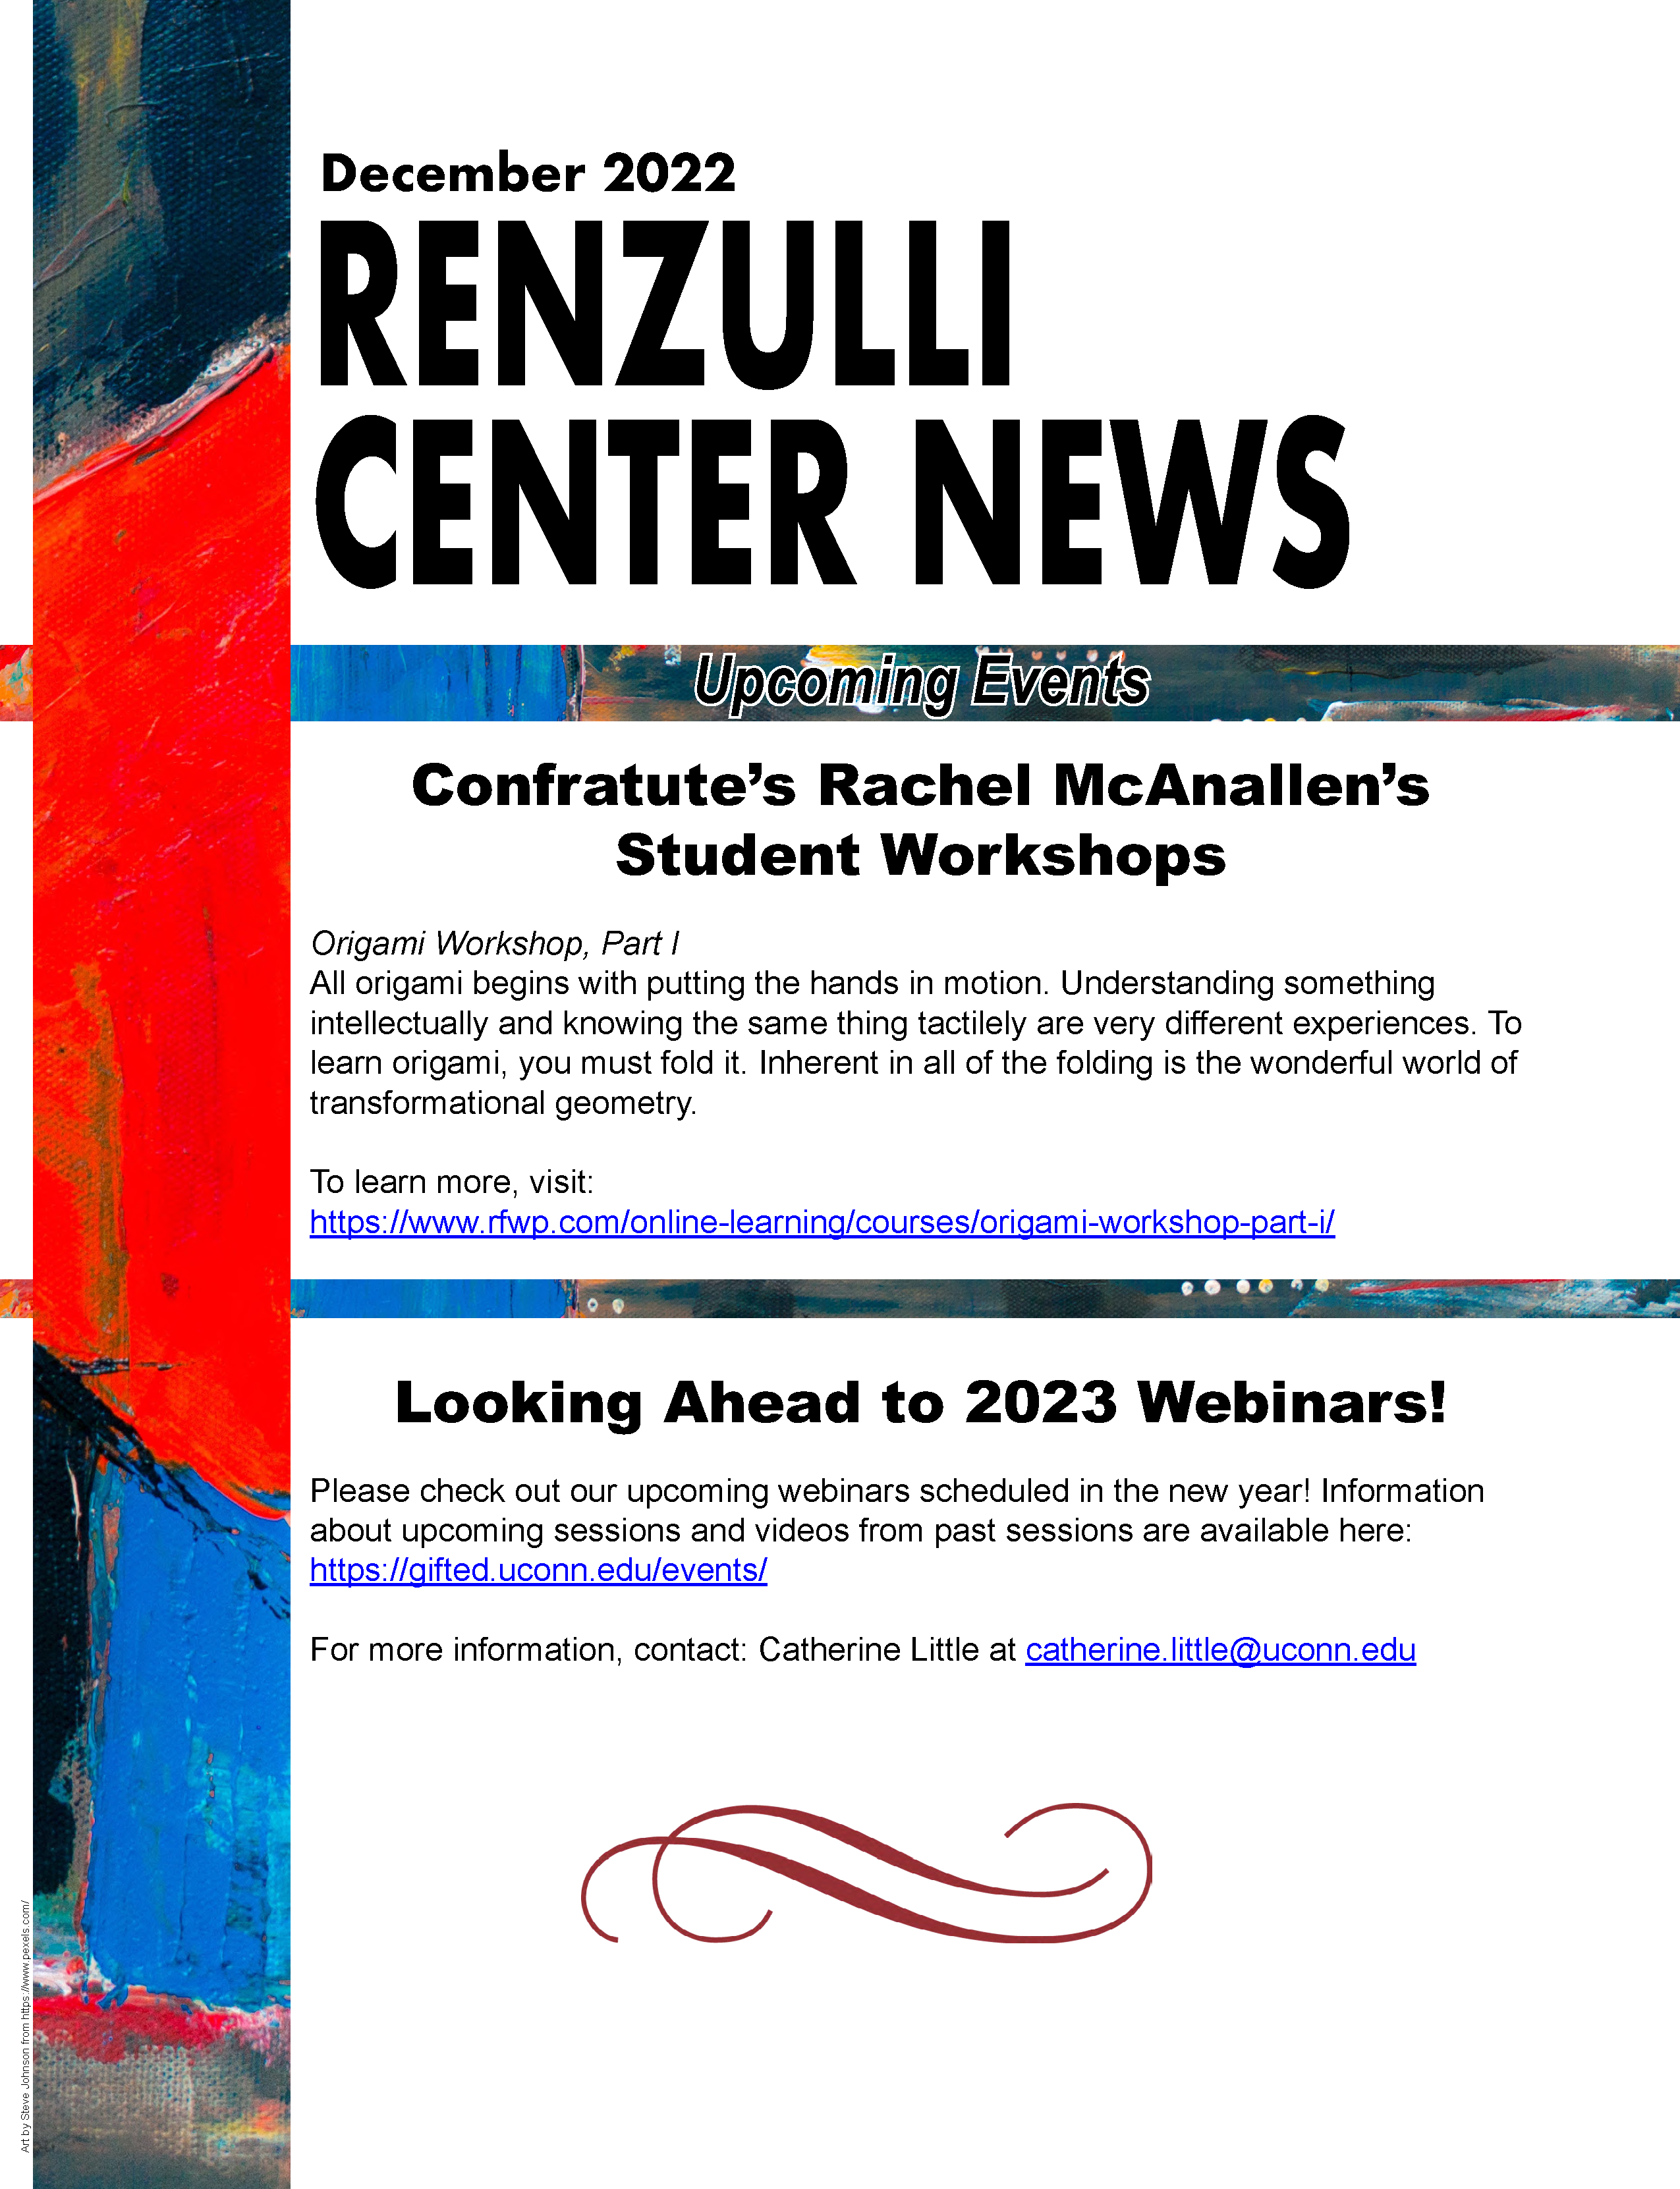 December 2022 Renzulli News Cover Graphic